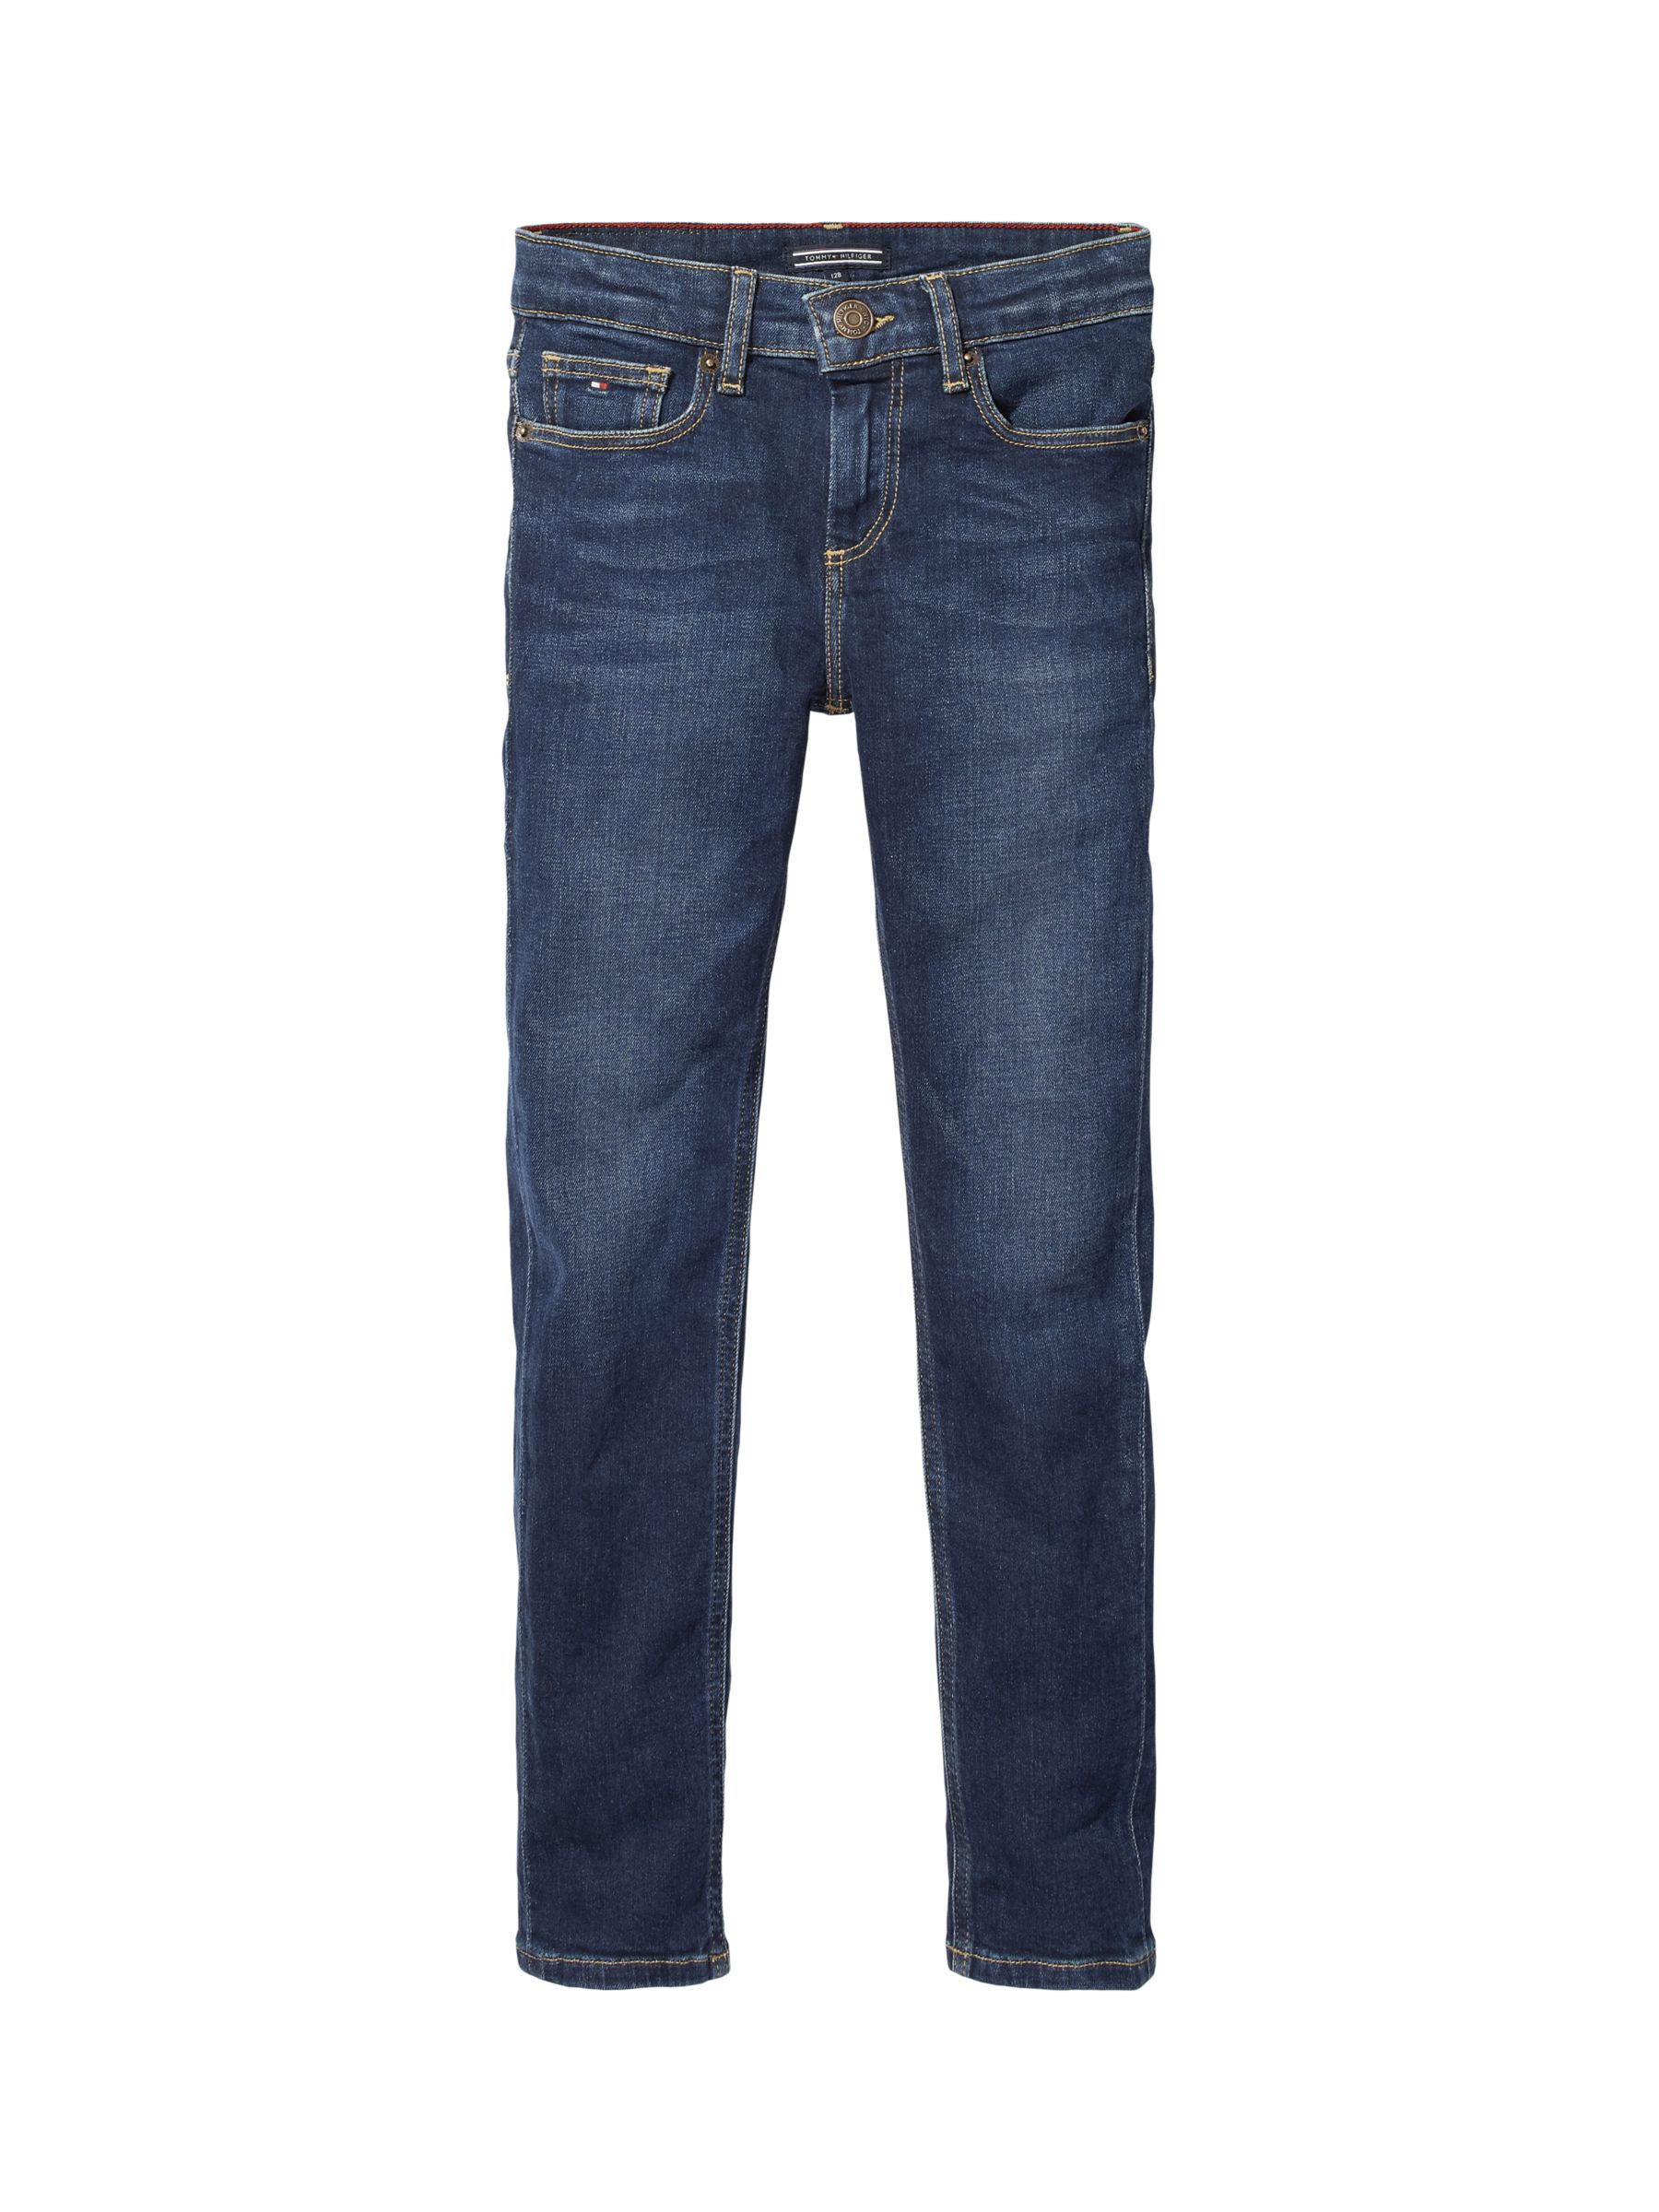 Tommy Hilfiger Boys' Slim Fit Jeans, New York Dark Stretch at Lewis & Partners